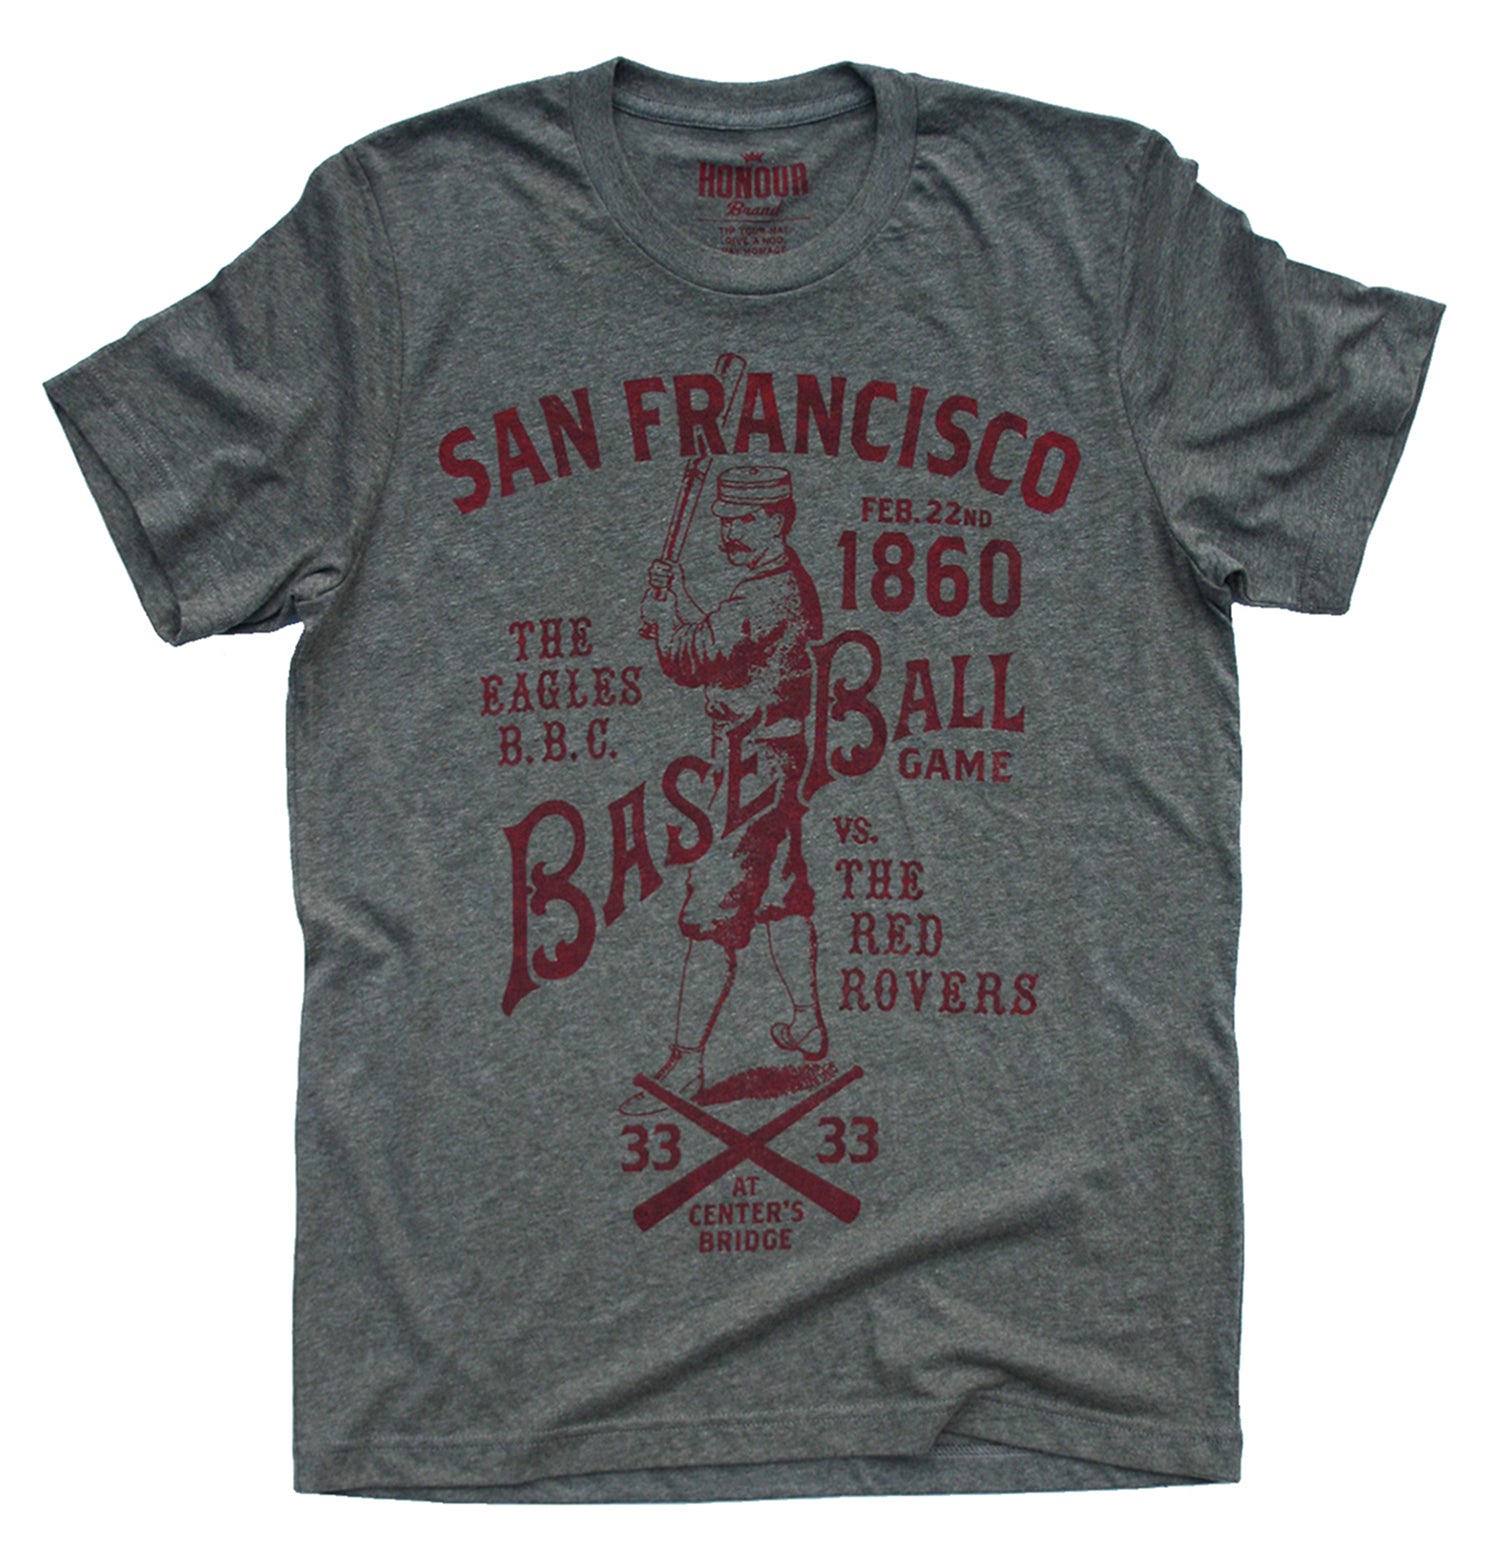 Shop San Francisco Tshirt online